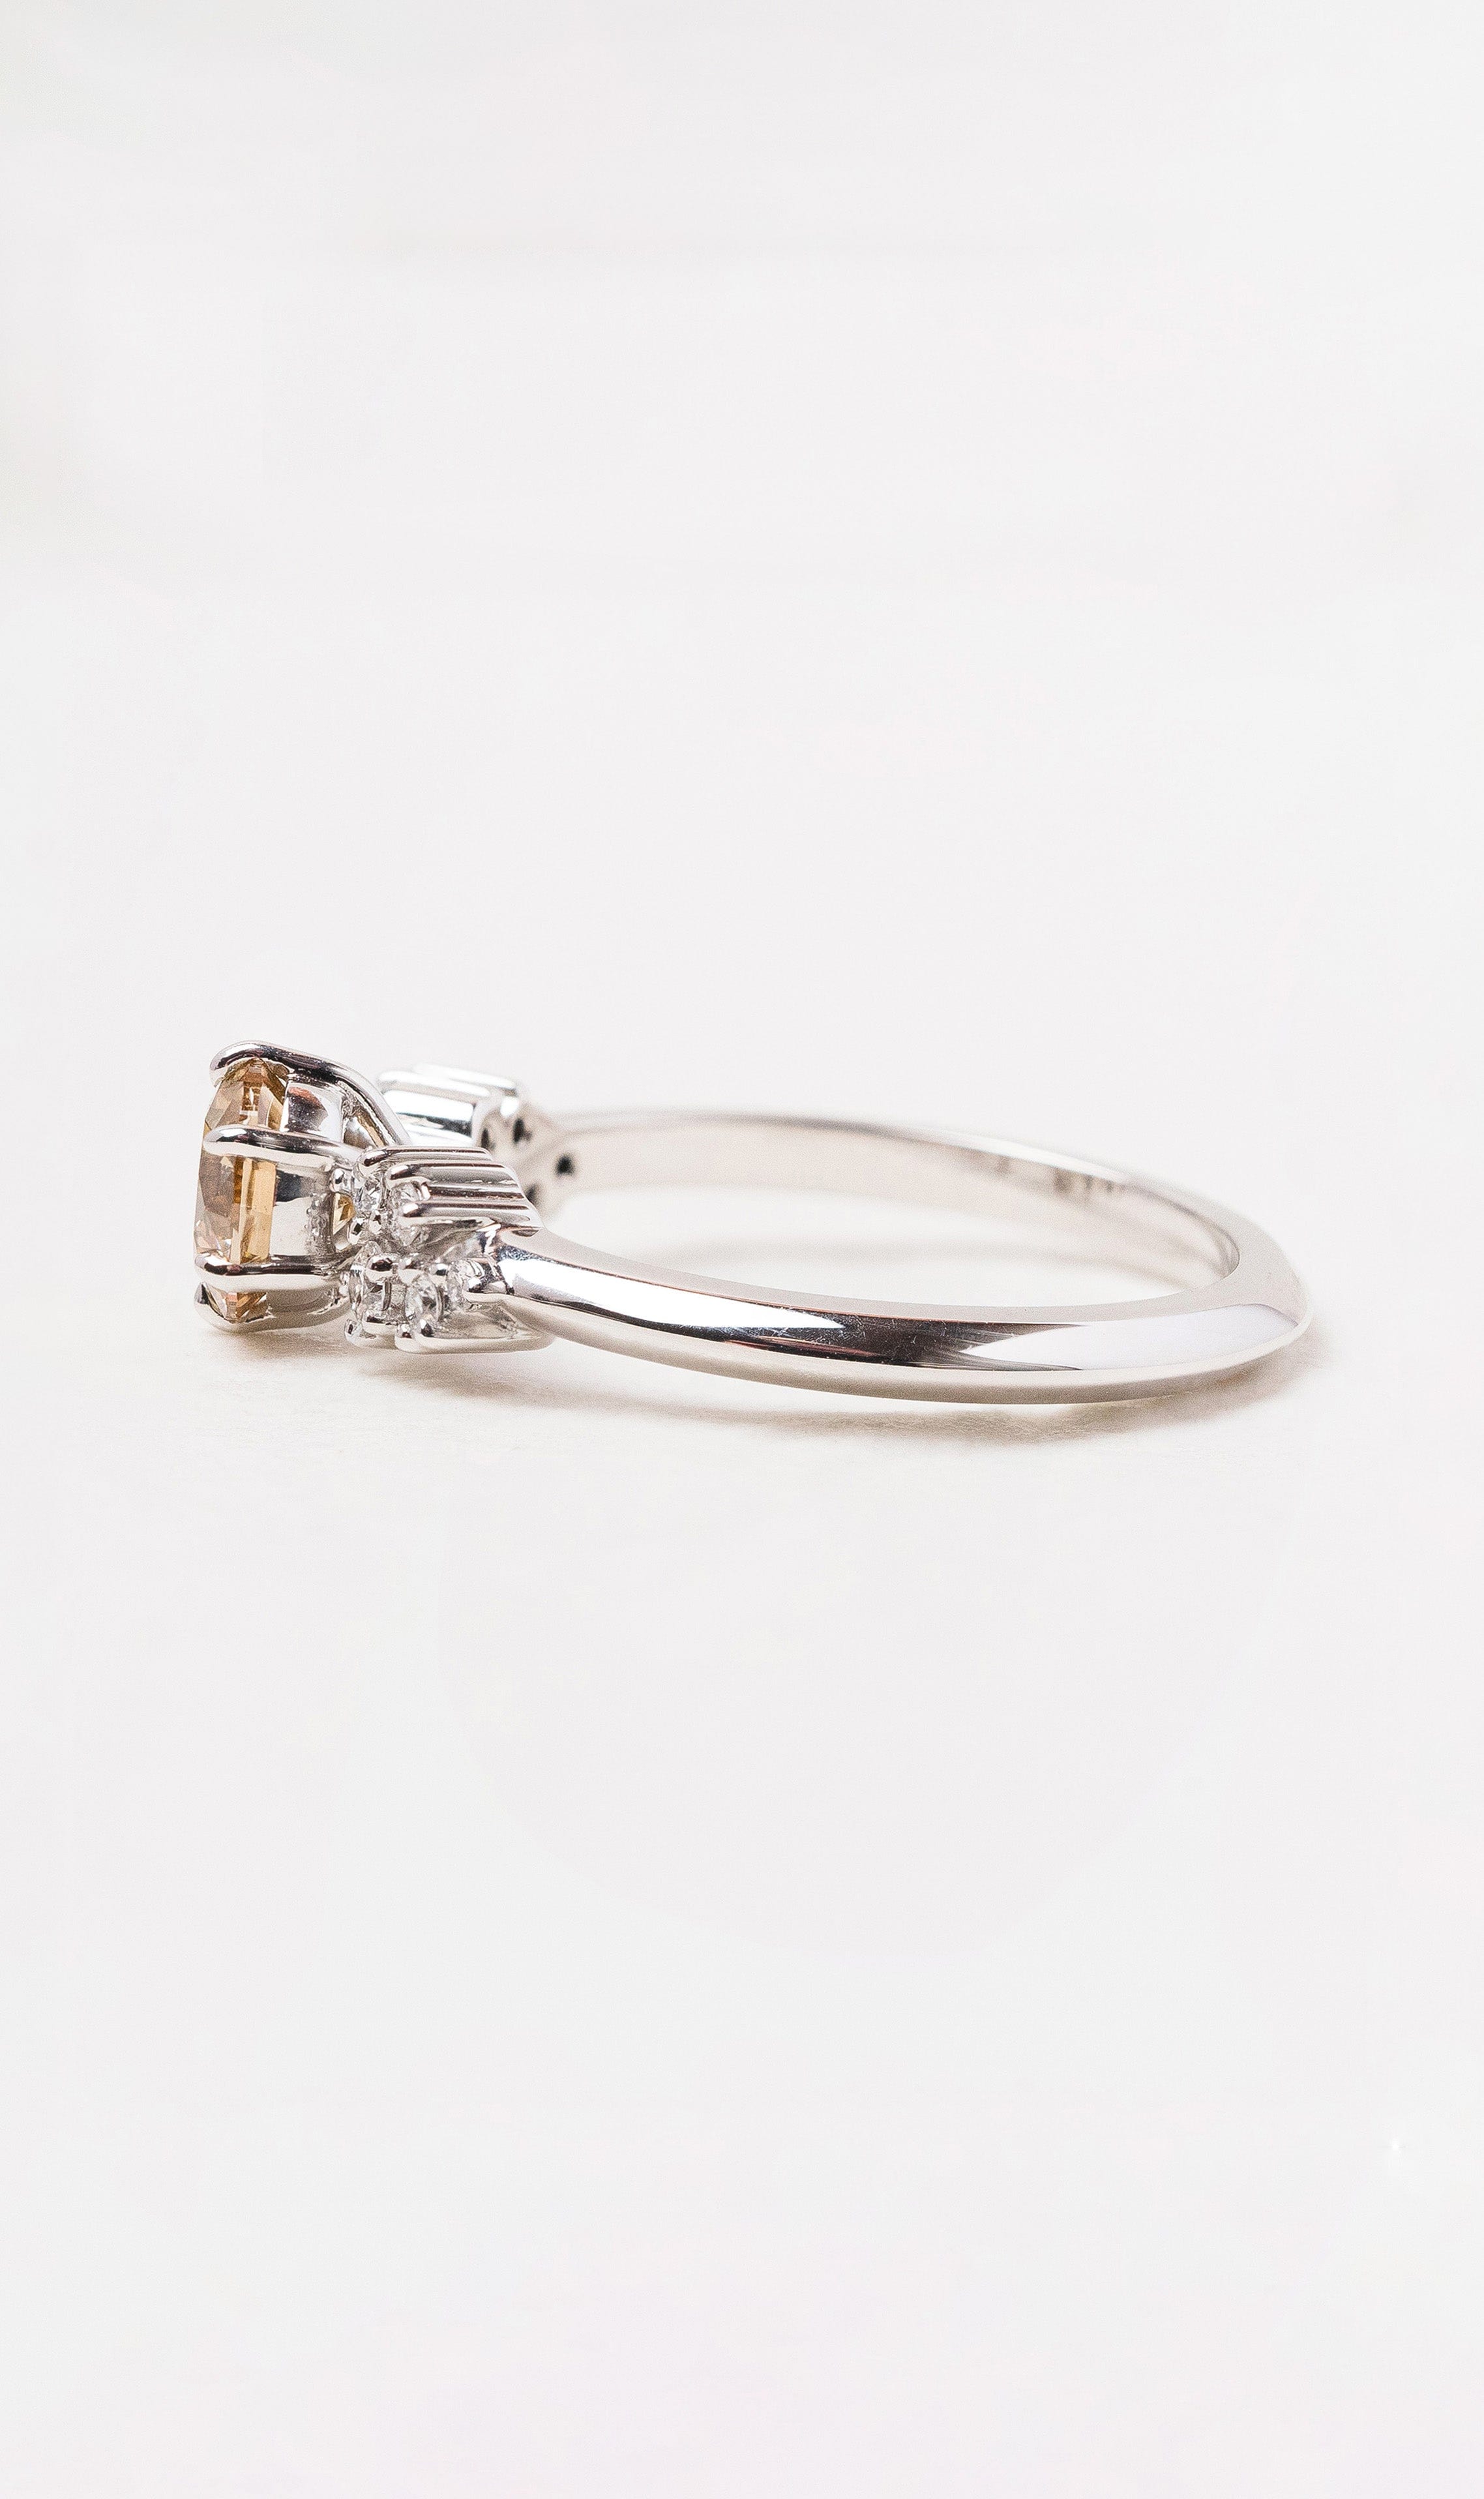 Hogans Family Jewellers 18K WG Champagne Diamond Ring